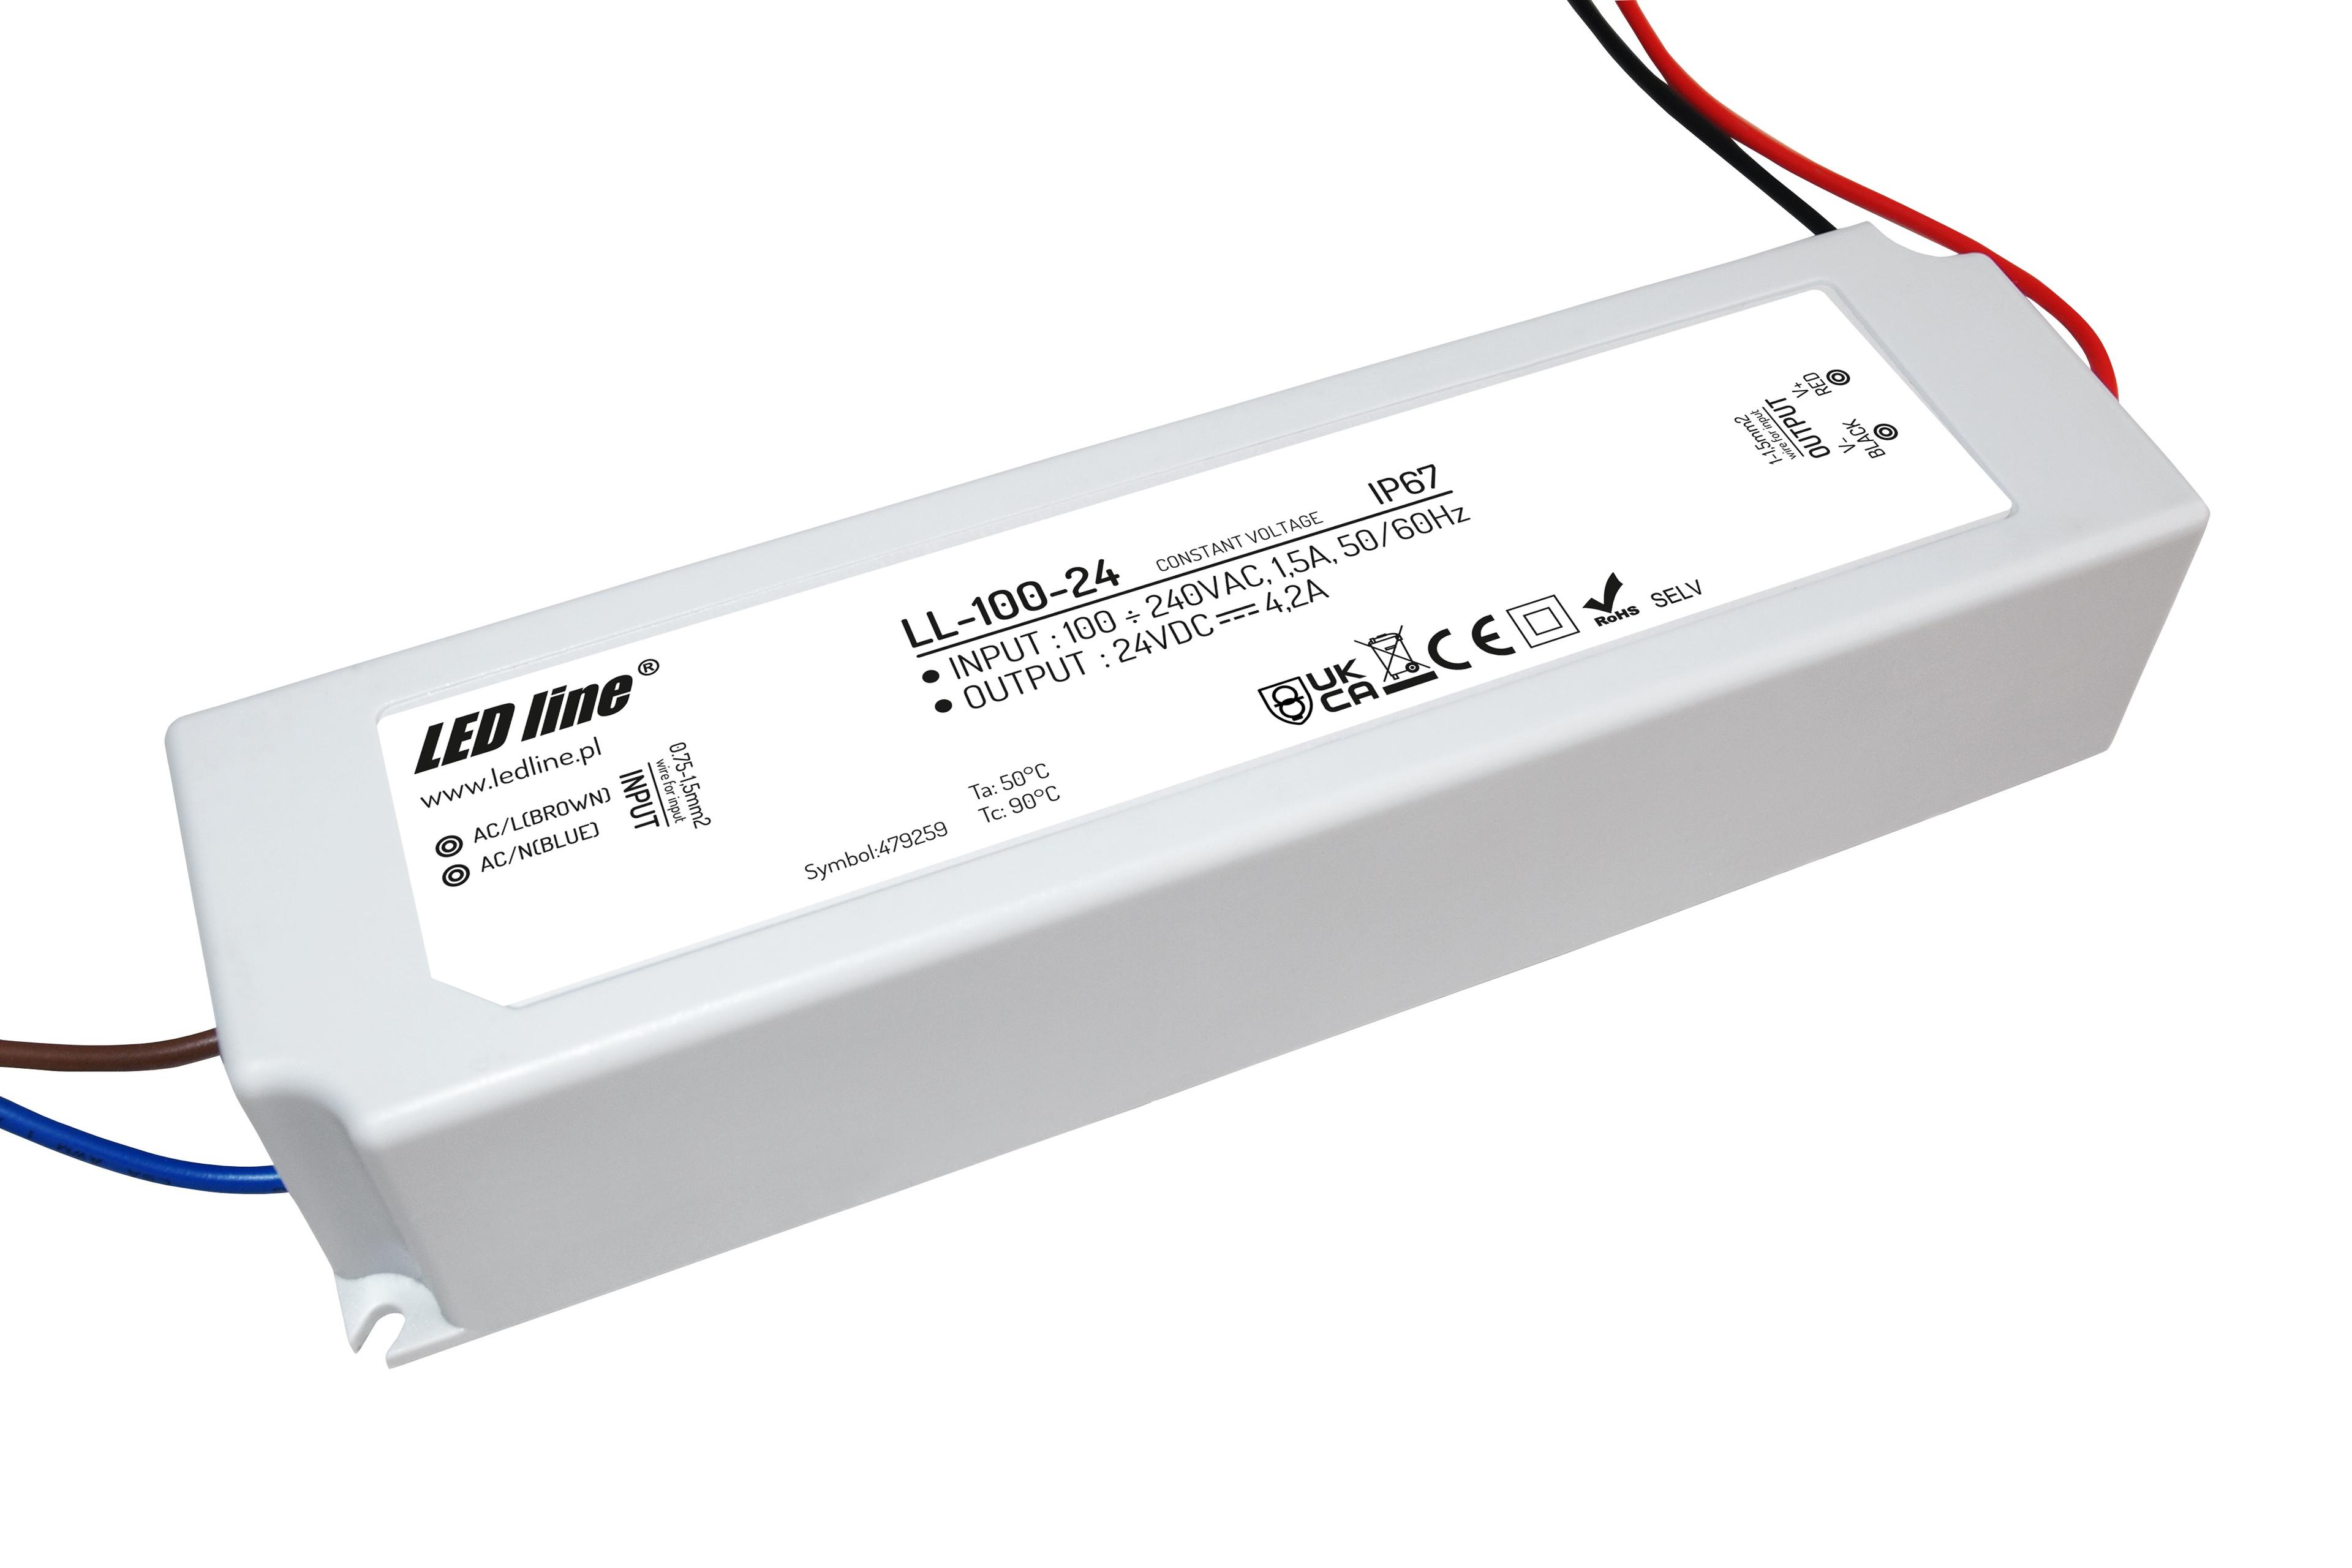 Zasilacz LED line 24V 100W 4,2A wodoodporny IP67 LL-100-24-0